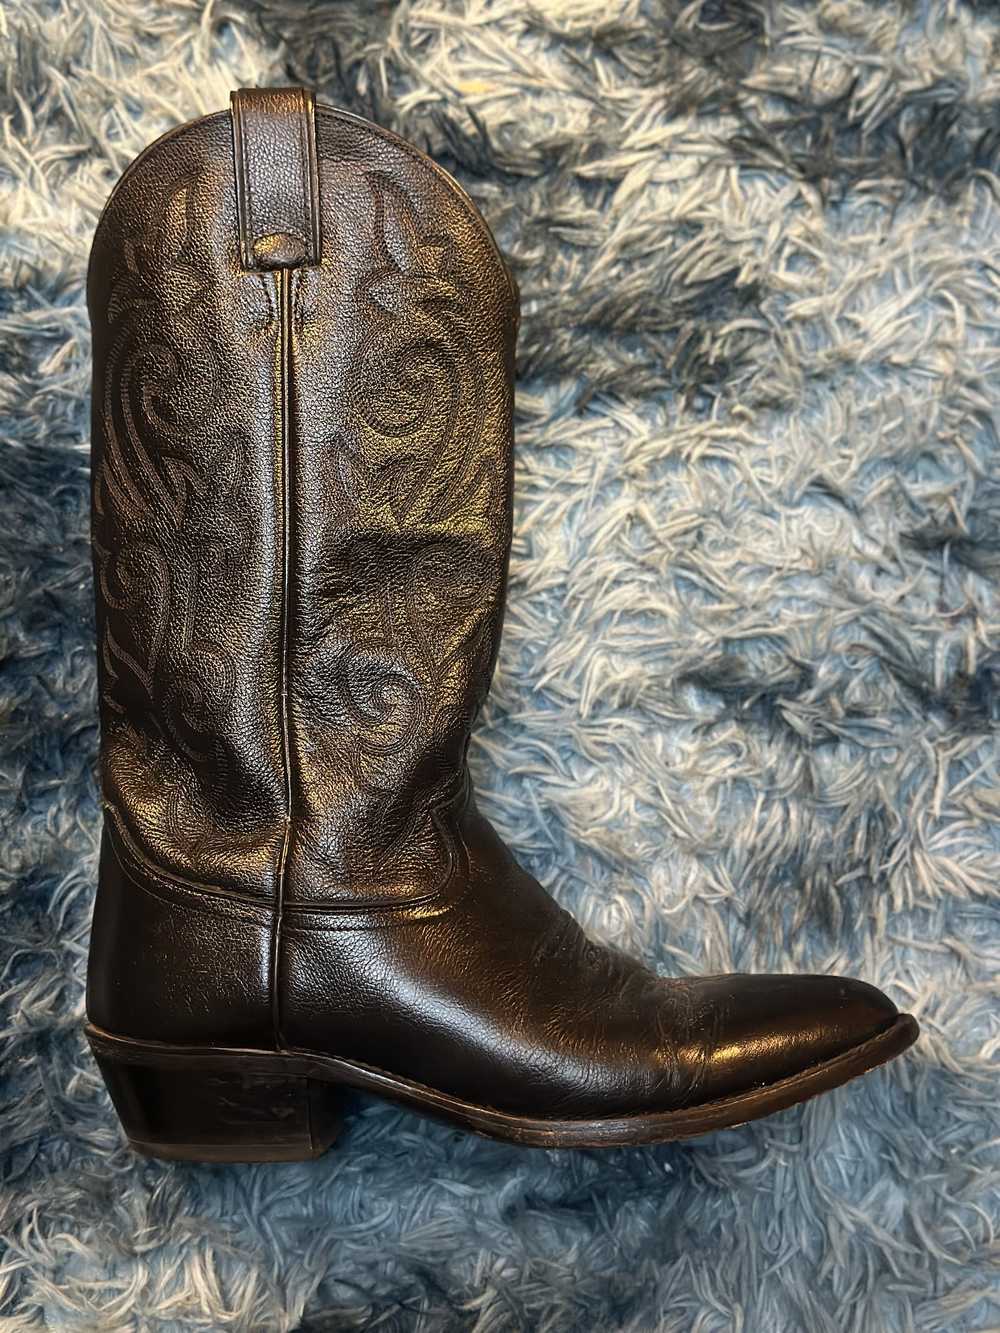 Vintage Black Leather Cowboy boots - image 1